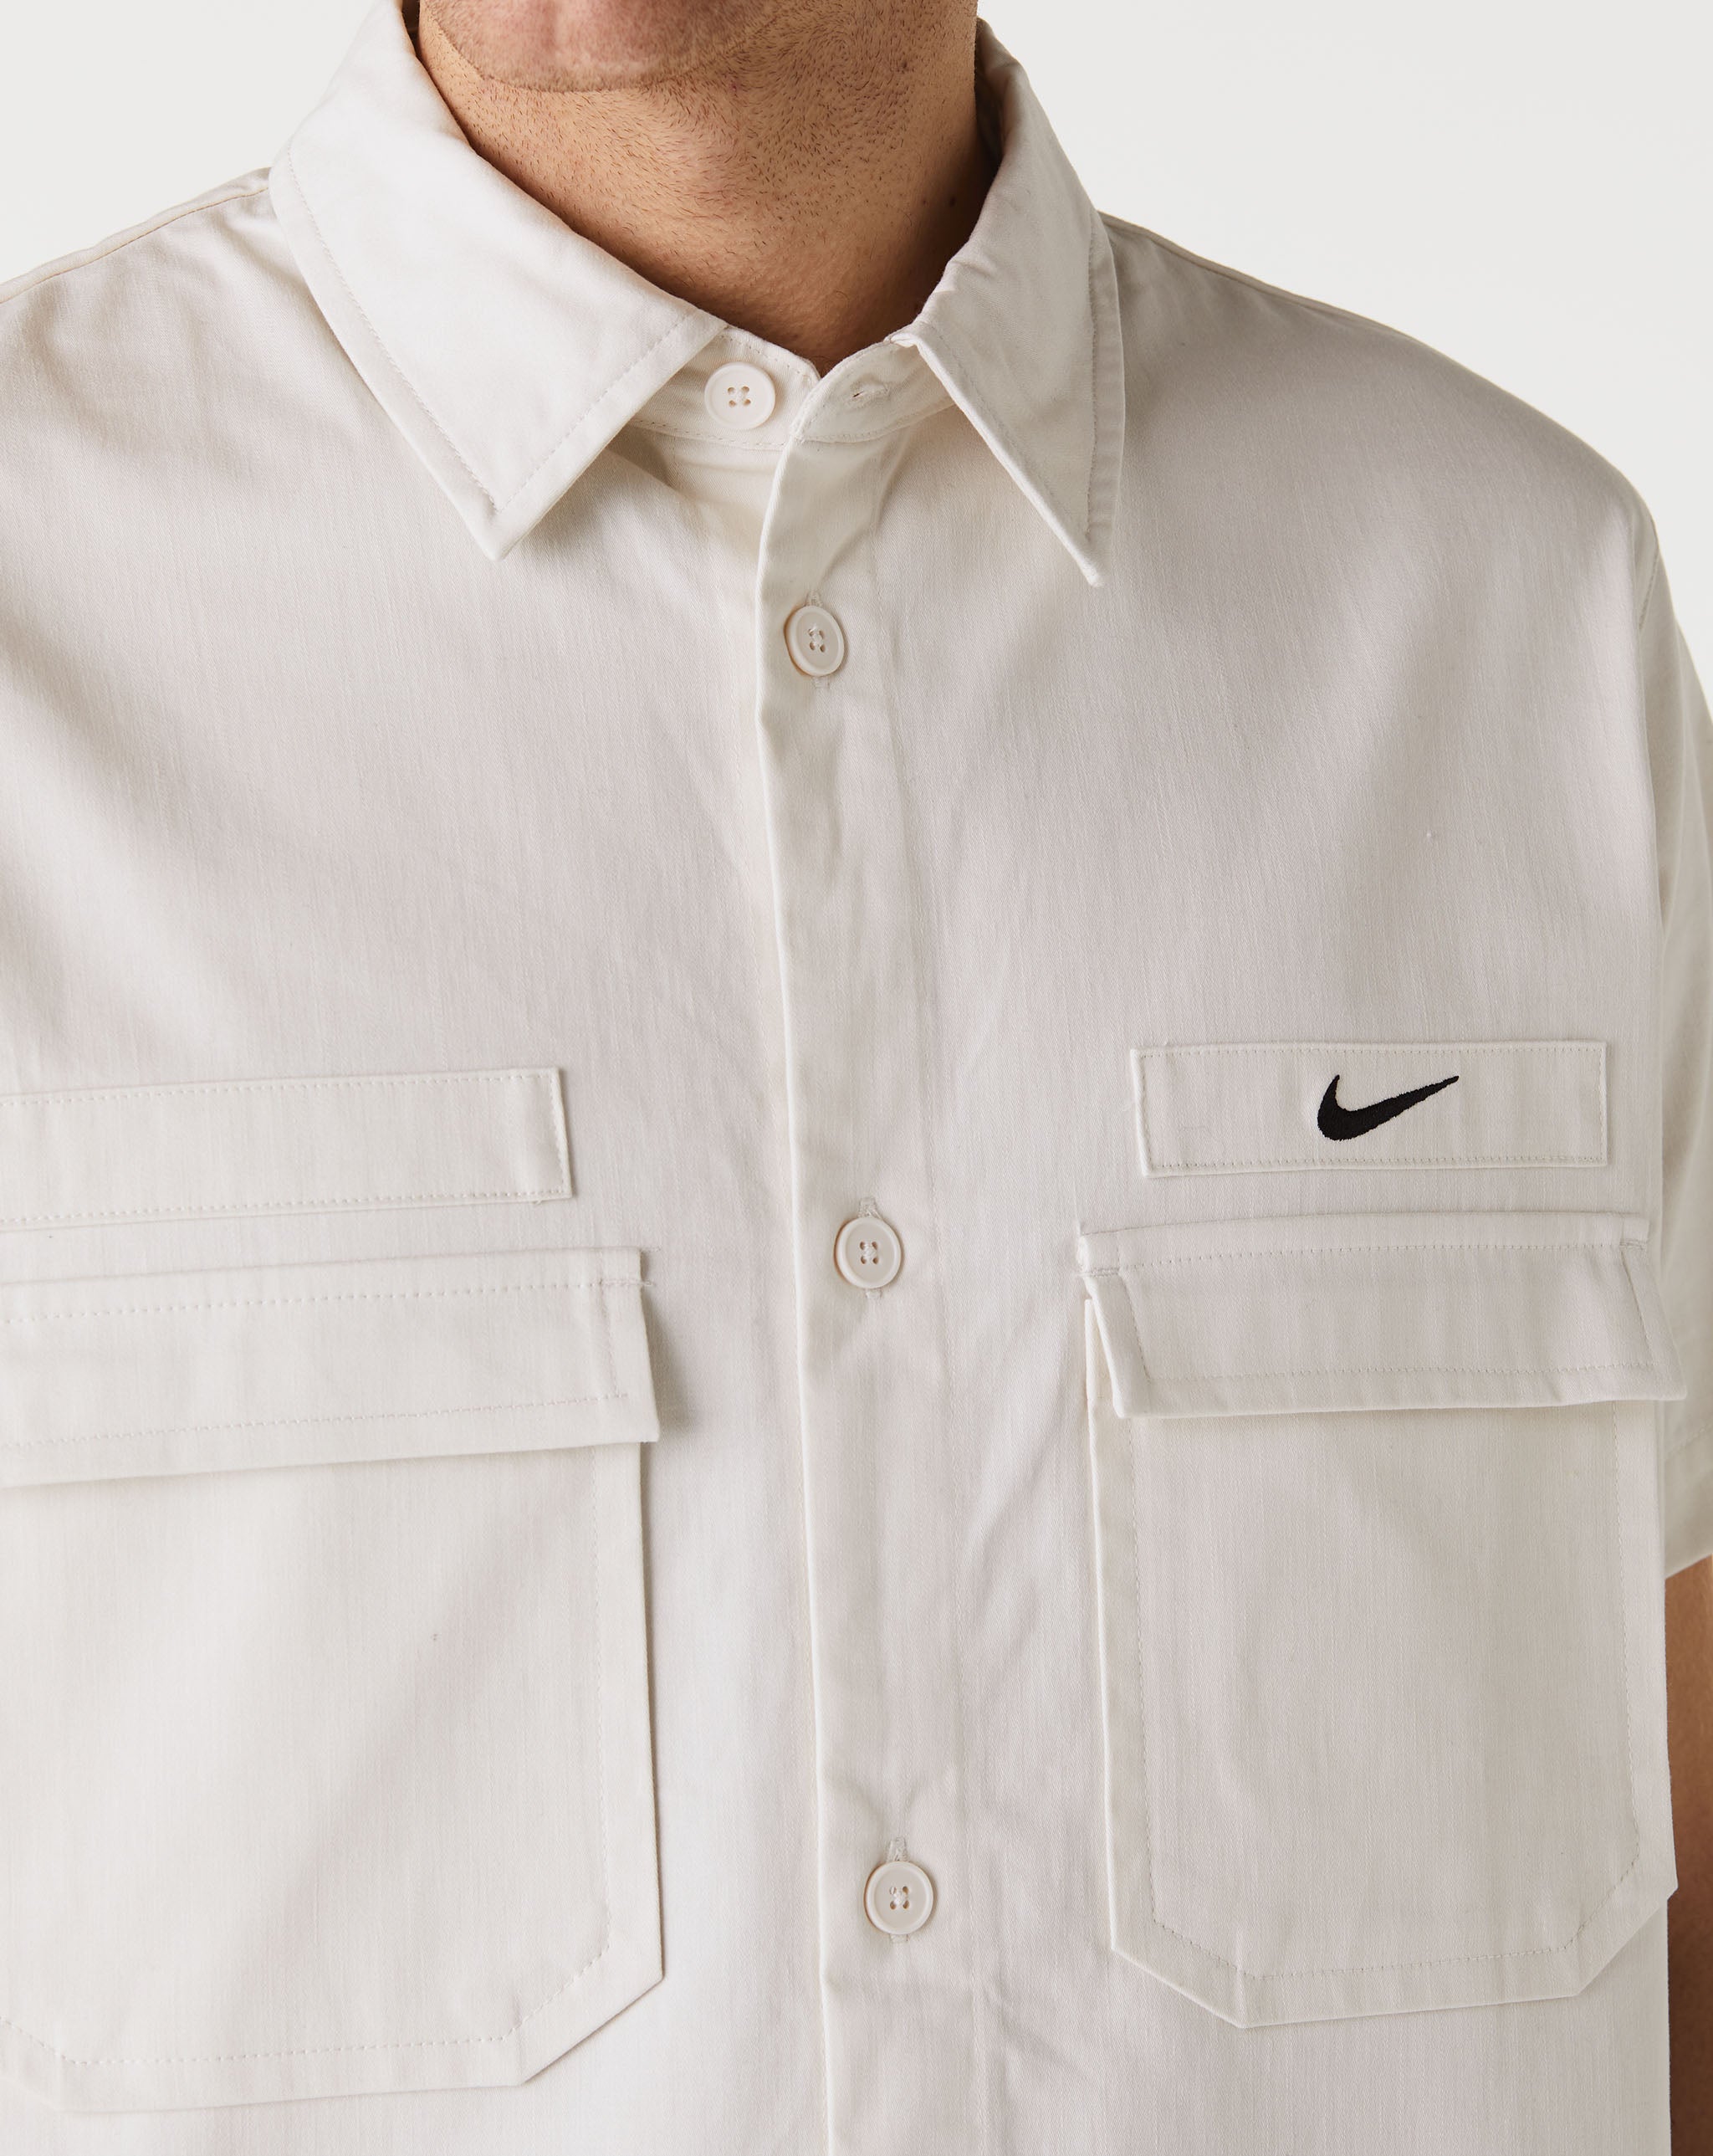 Nike REMAIN Dreah Pullover Grau  - Cheap 127-0 Jordan outlet